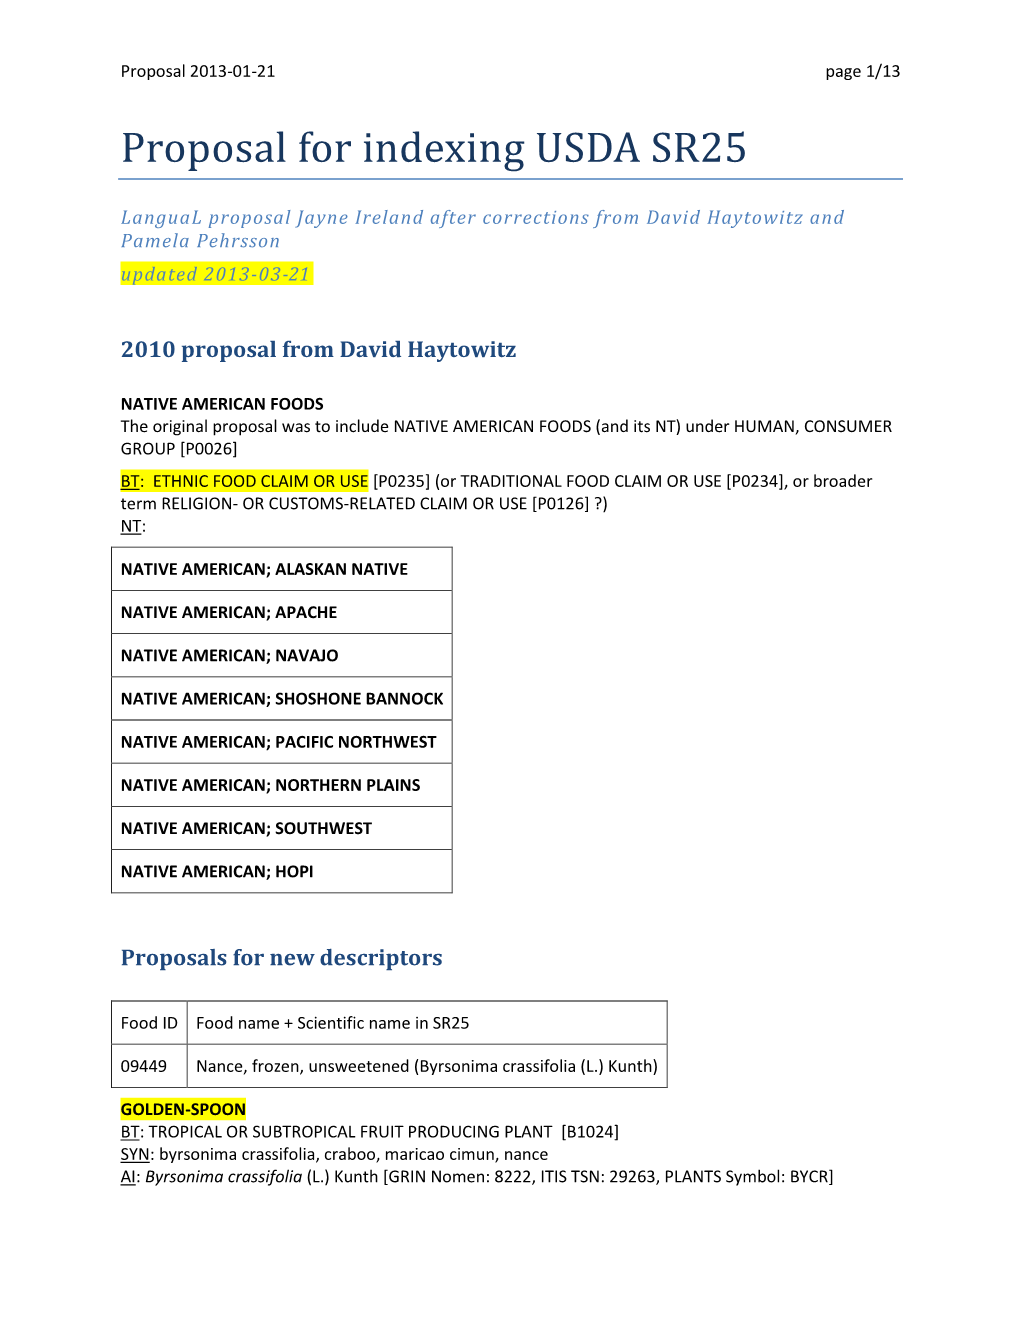 Proposal for Indexing USDA SR25